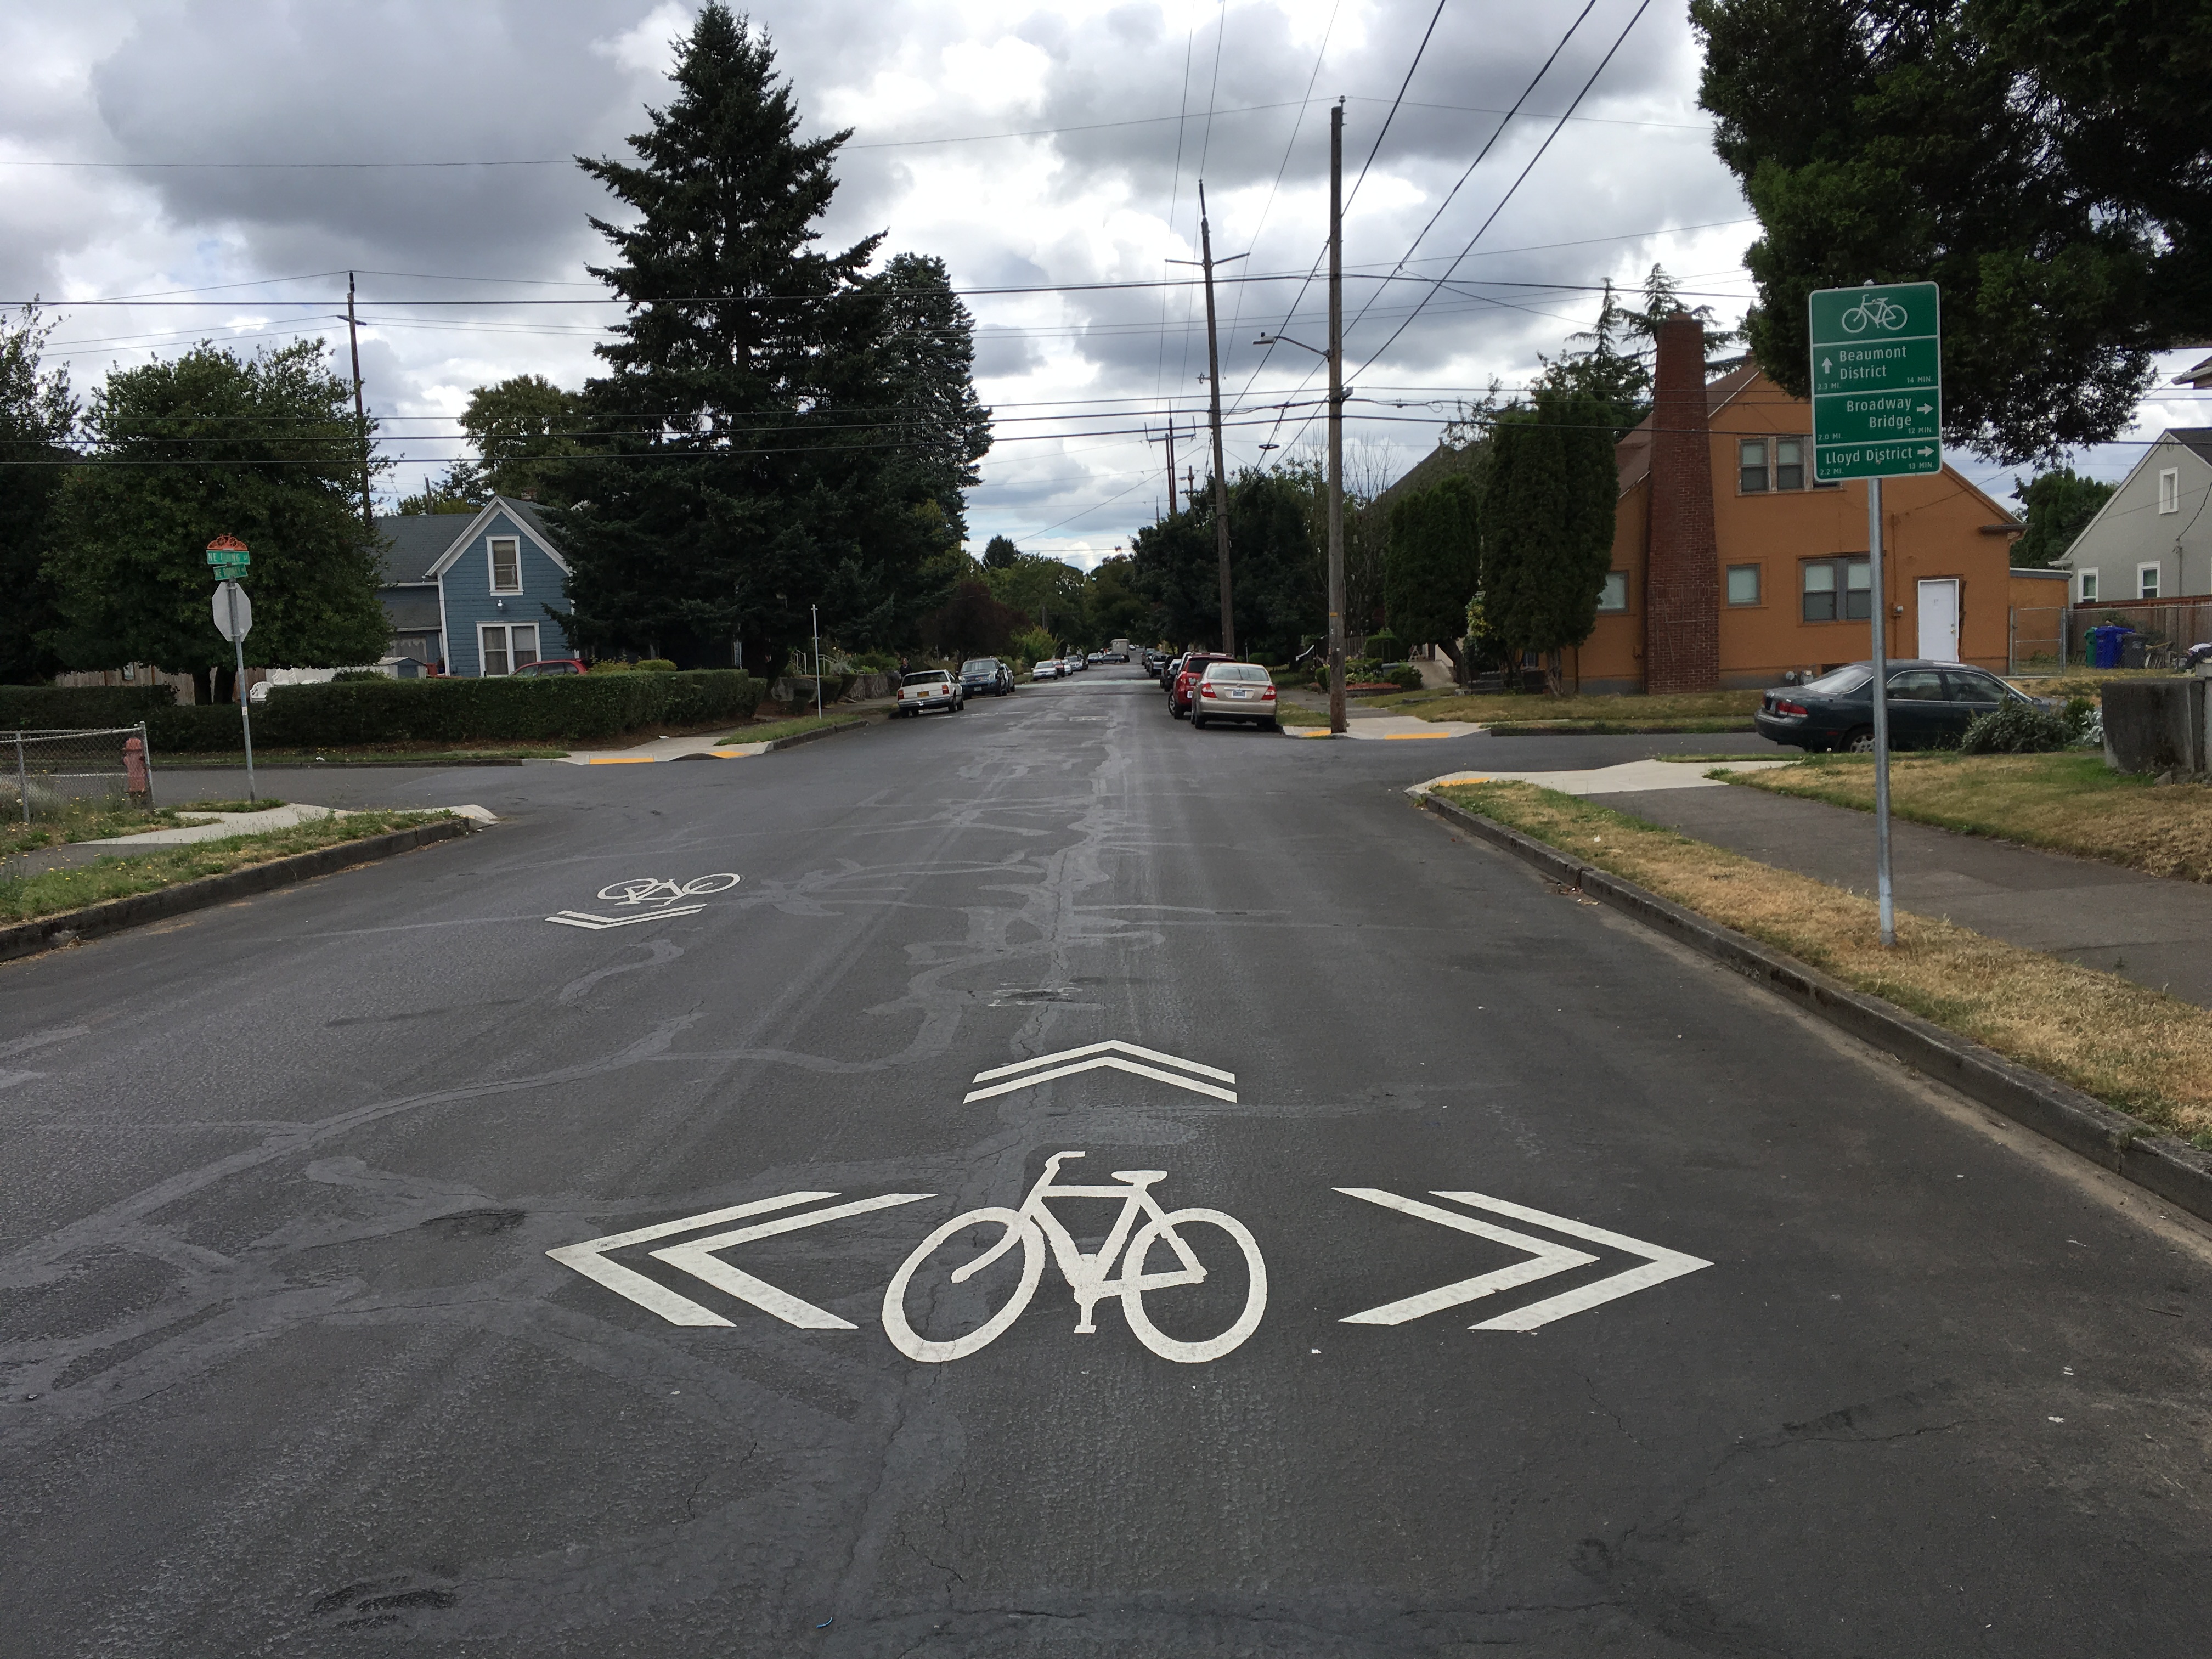 Sharrows Shared Lane Markings for Street Cyclists May